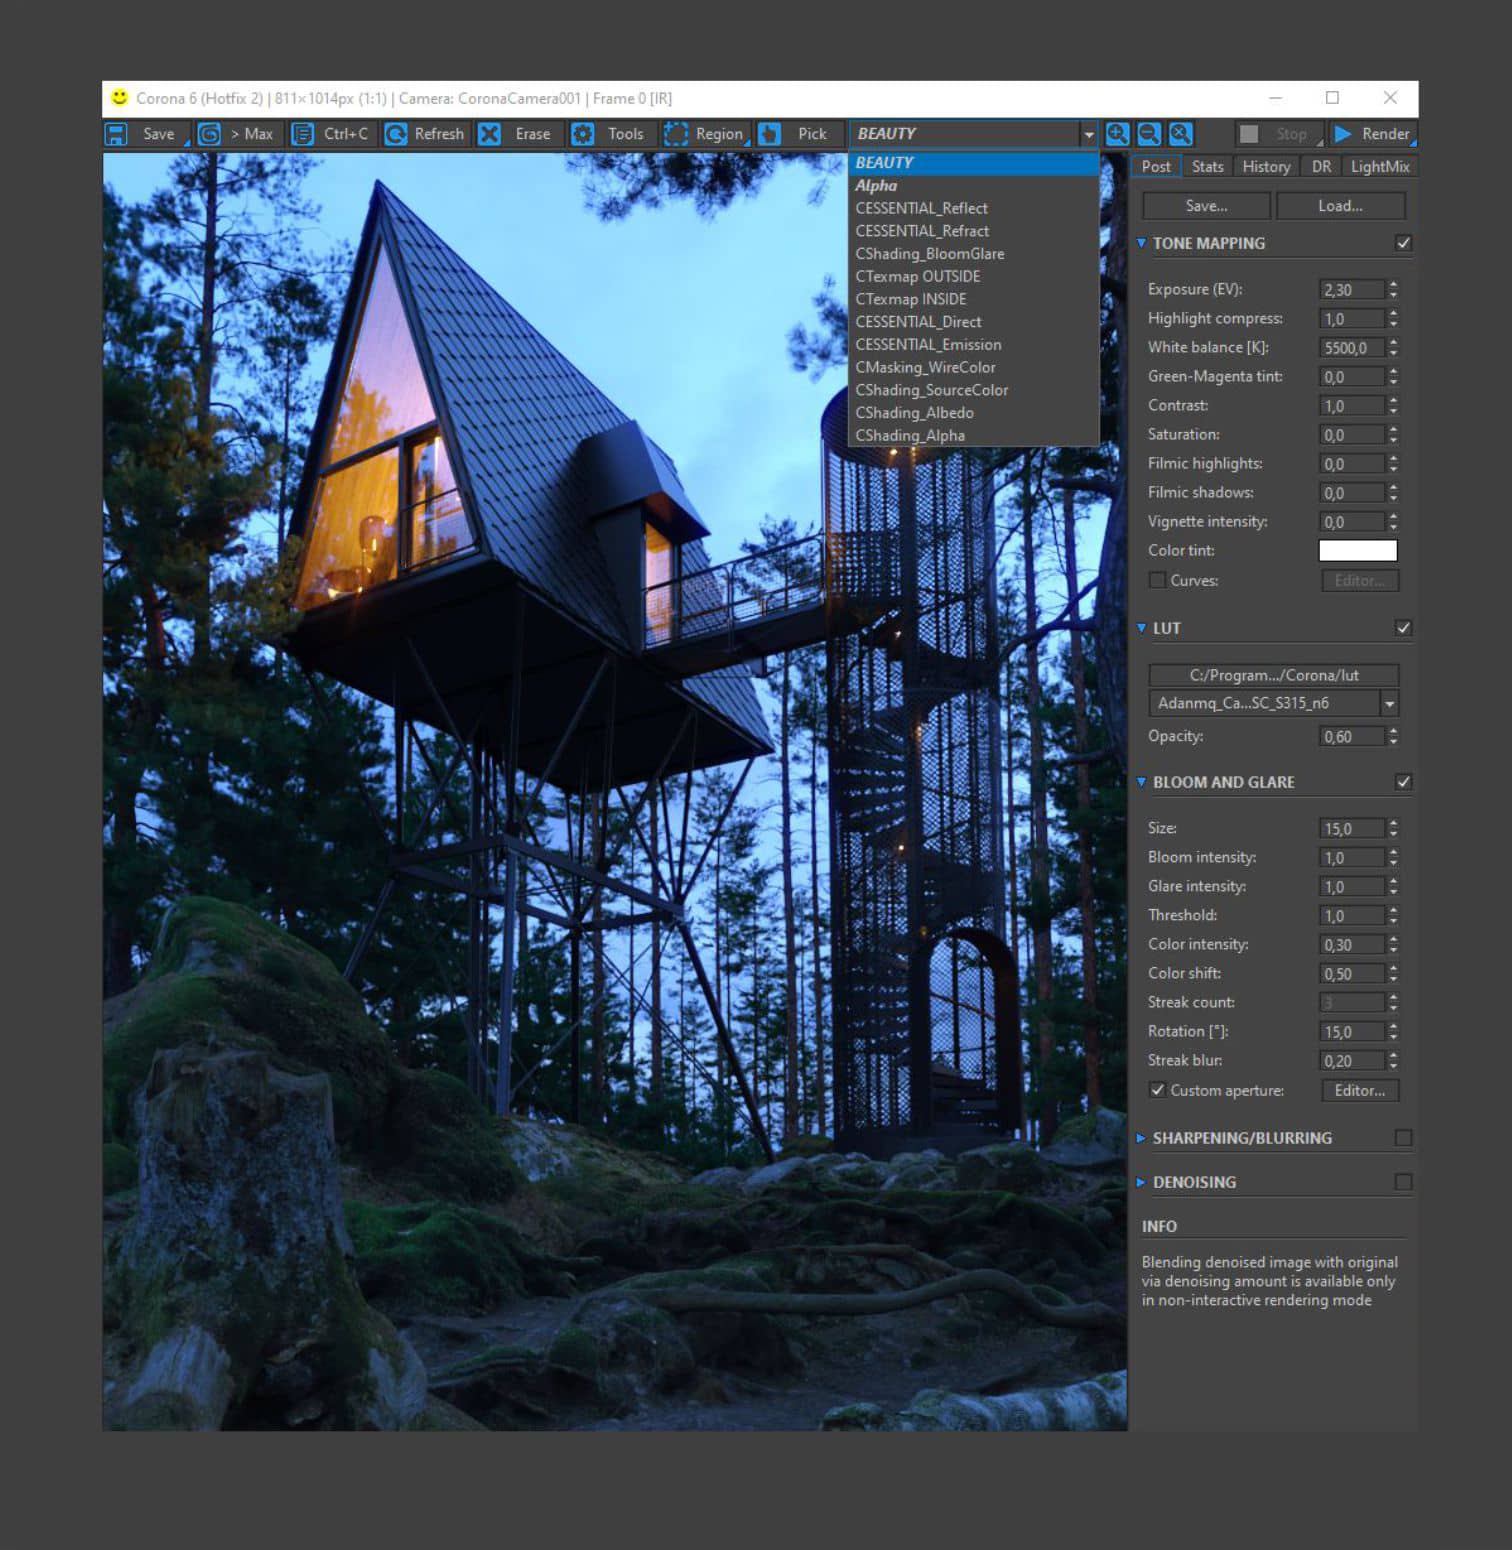 The Making of 'PAN Treetop Cabin' bySony Rafael Leao